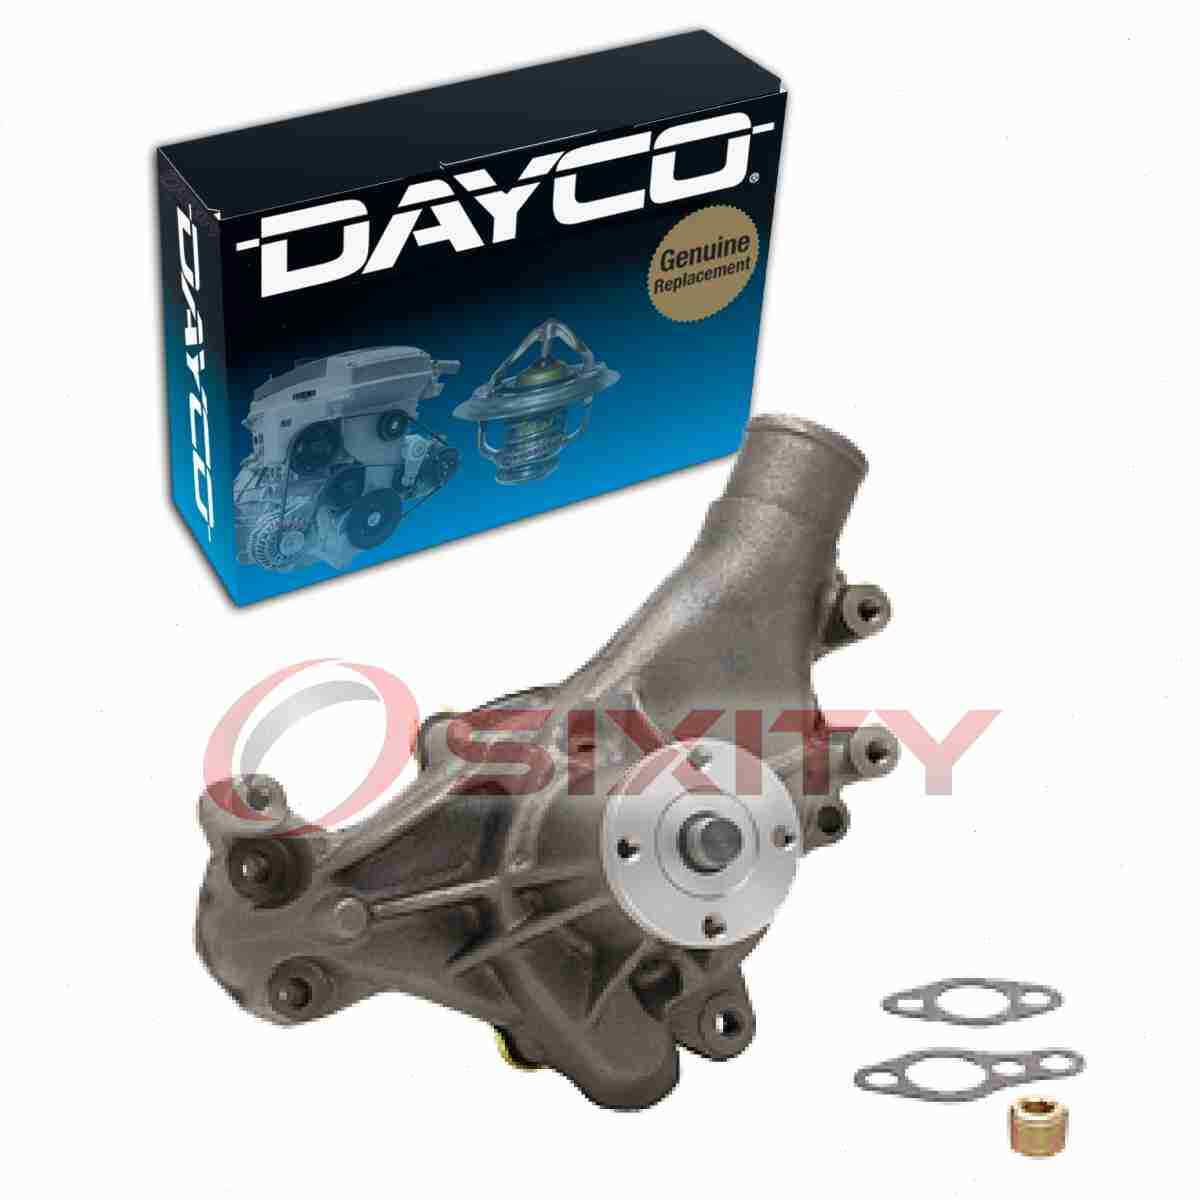 Dayco Engine Water Pump for 1978-1987 Oldsmobile Cutlass 4.4L 5.0L 5.7L V8 kt